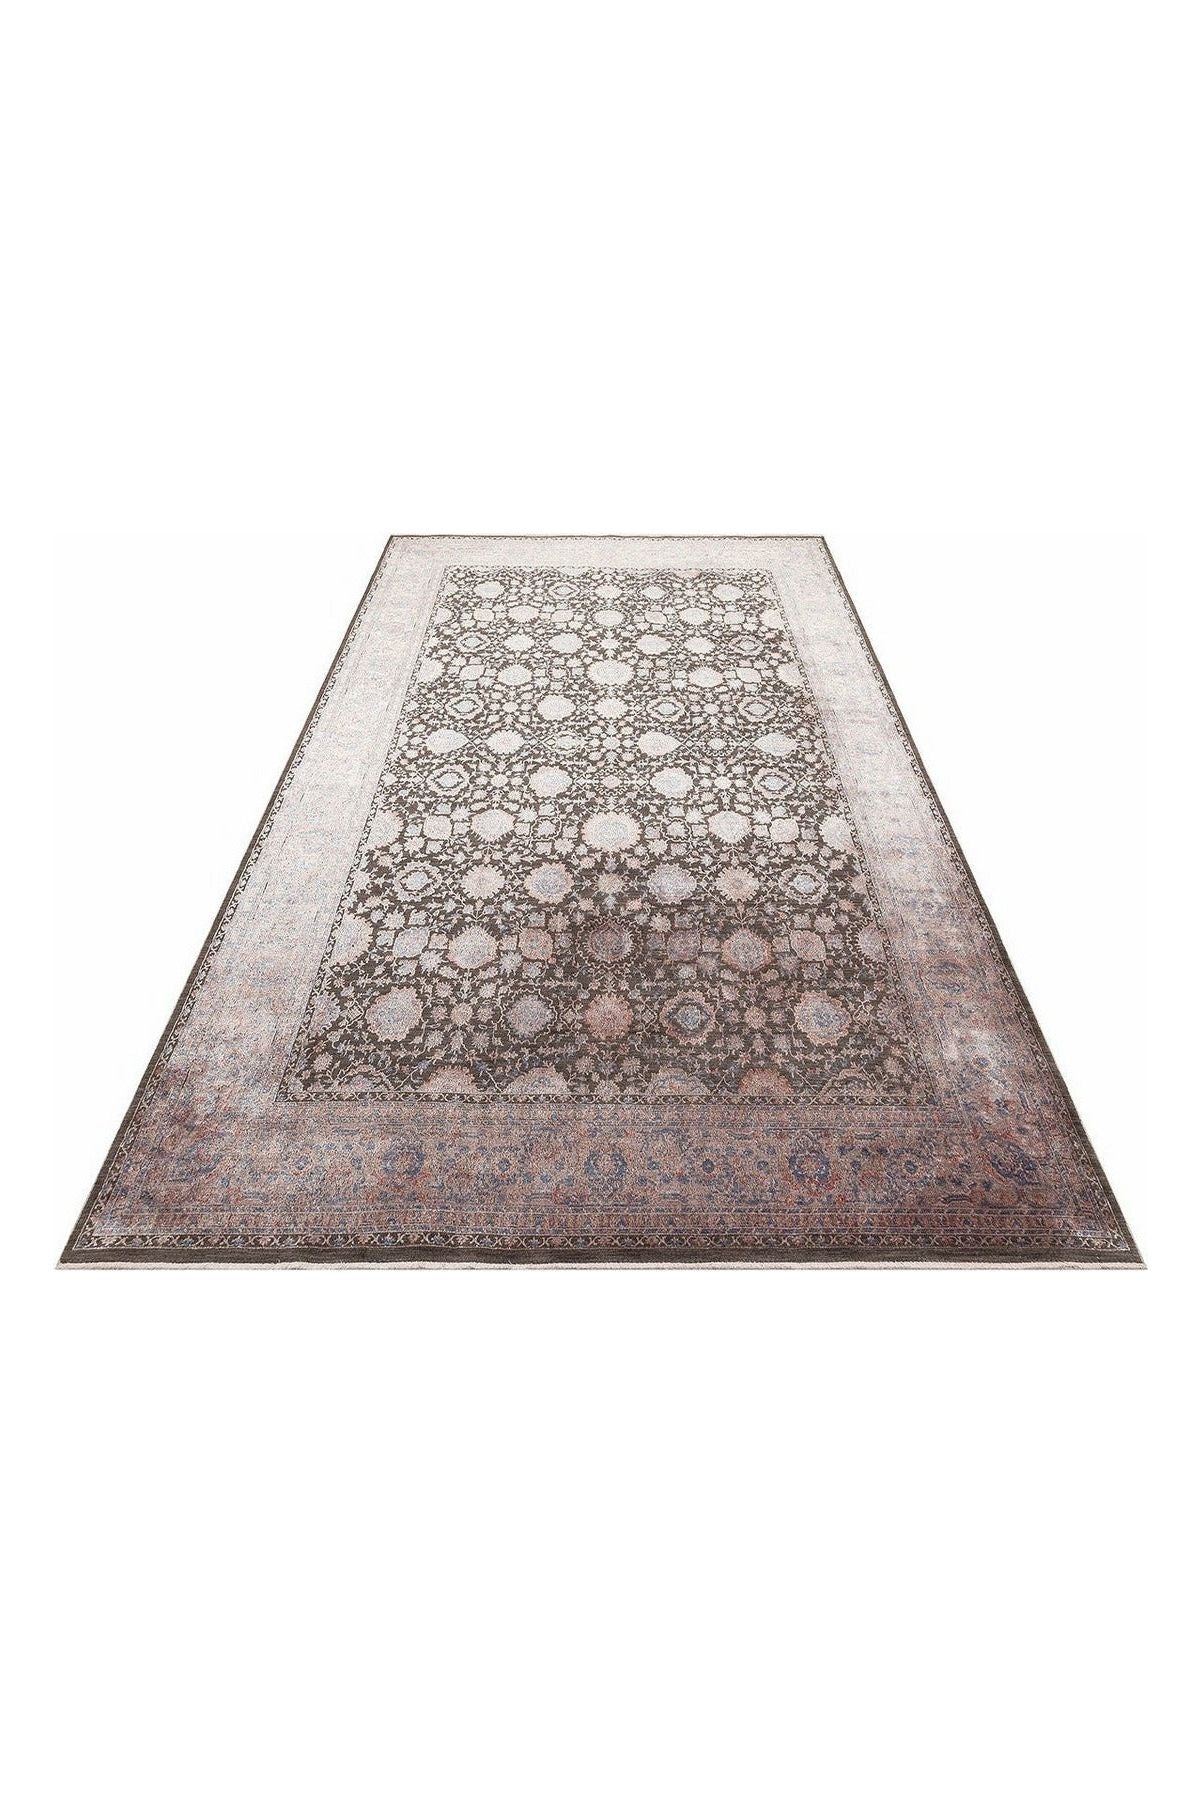 #Turkish_Carpets_Rugs# #Modern_Carpets# #Abrash_Carpets#Lhr 01 Bronze